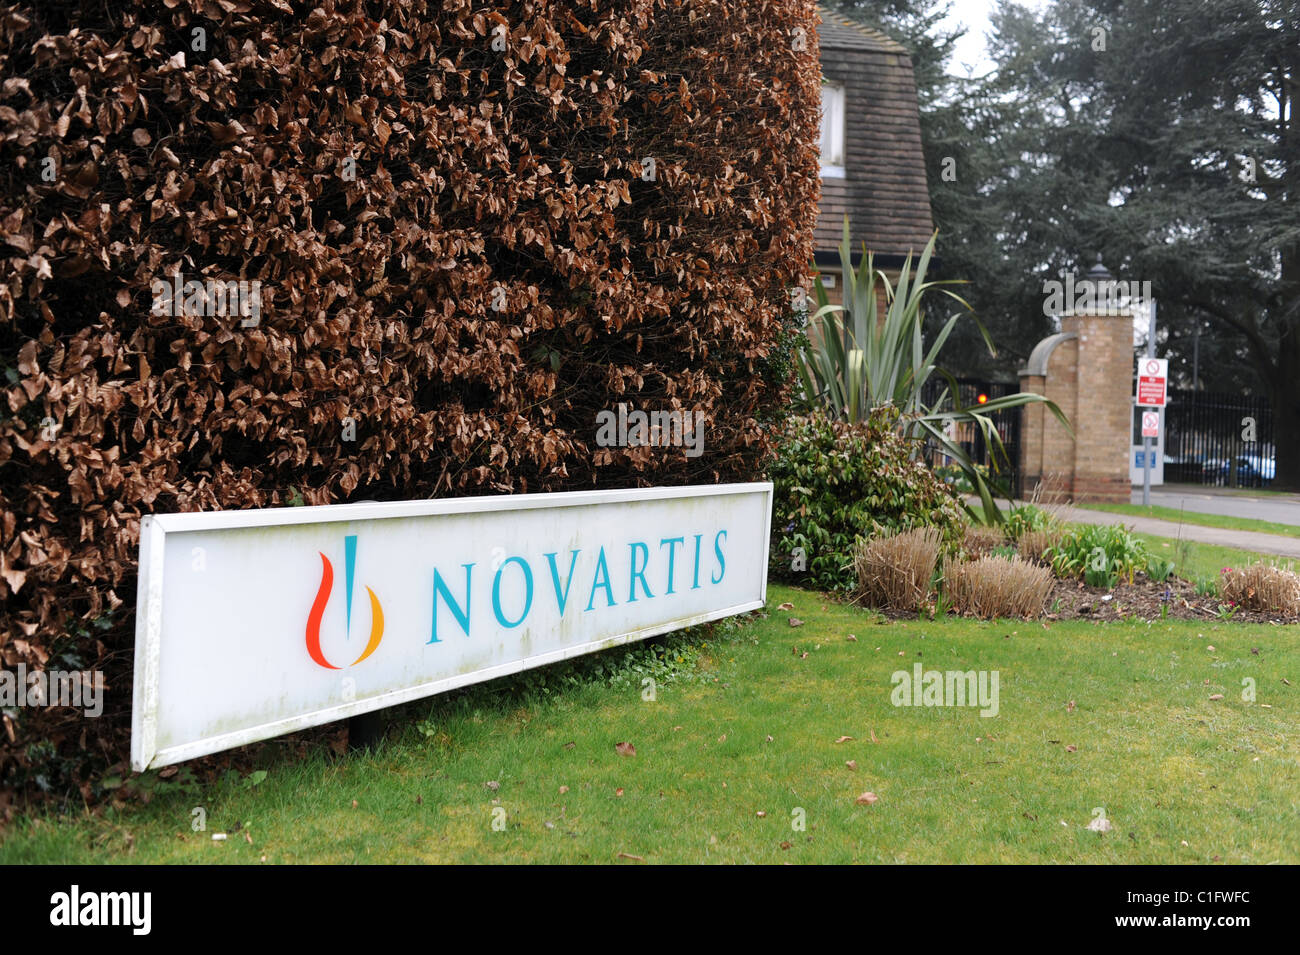 The Novartis Pharmaceutical Company based at Horsham in West Sussex Uk Stock Photo